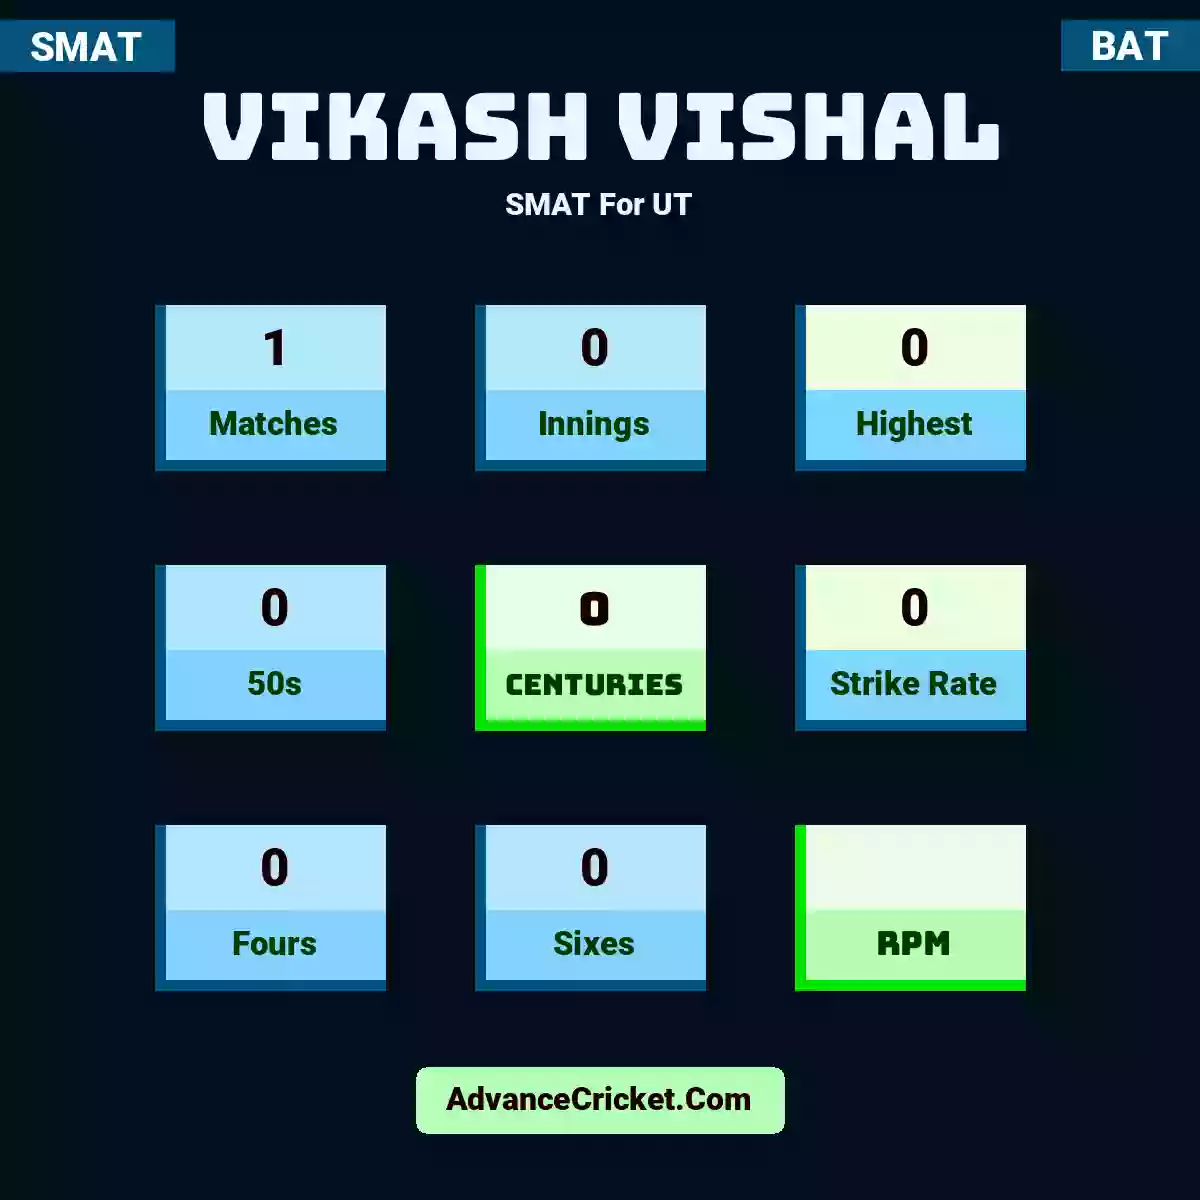 Vikash Vishal SMAT  For UT, Vikash Vishal played 1 matches, scored 0 runs as highest, 0 half-centuries, and 0 centuries, with a strike rate of 0. V.Vishal hit 0 fours and 0 sixes.